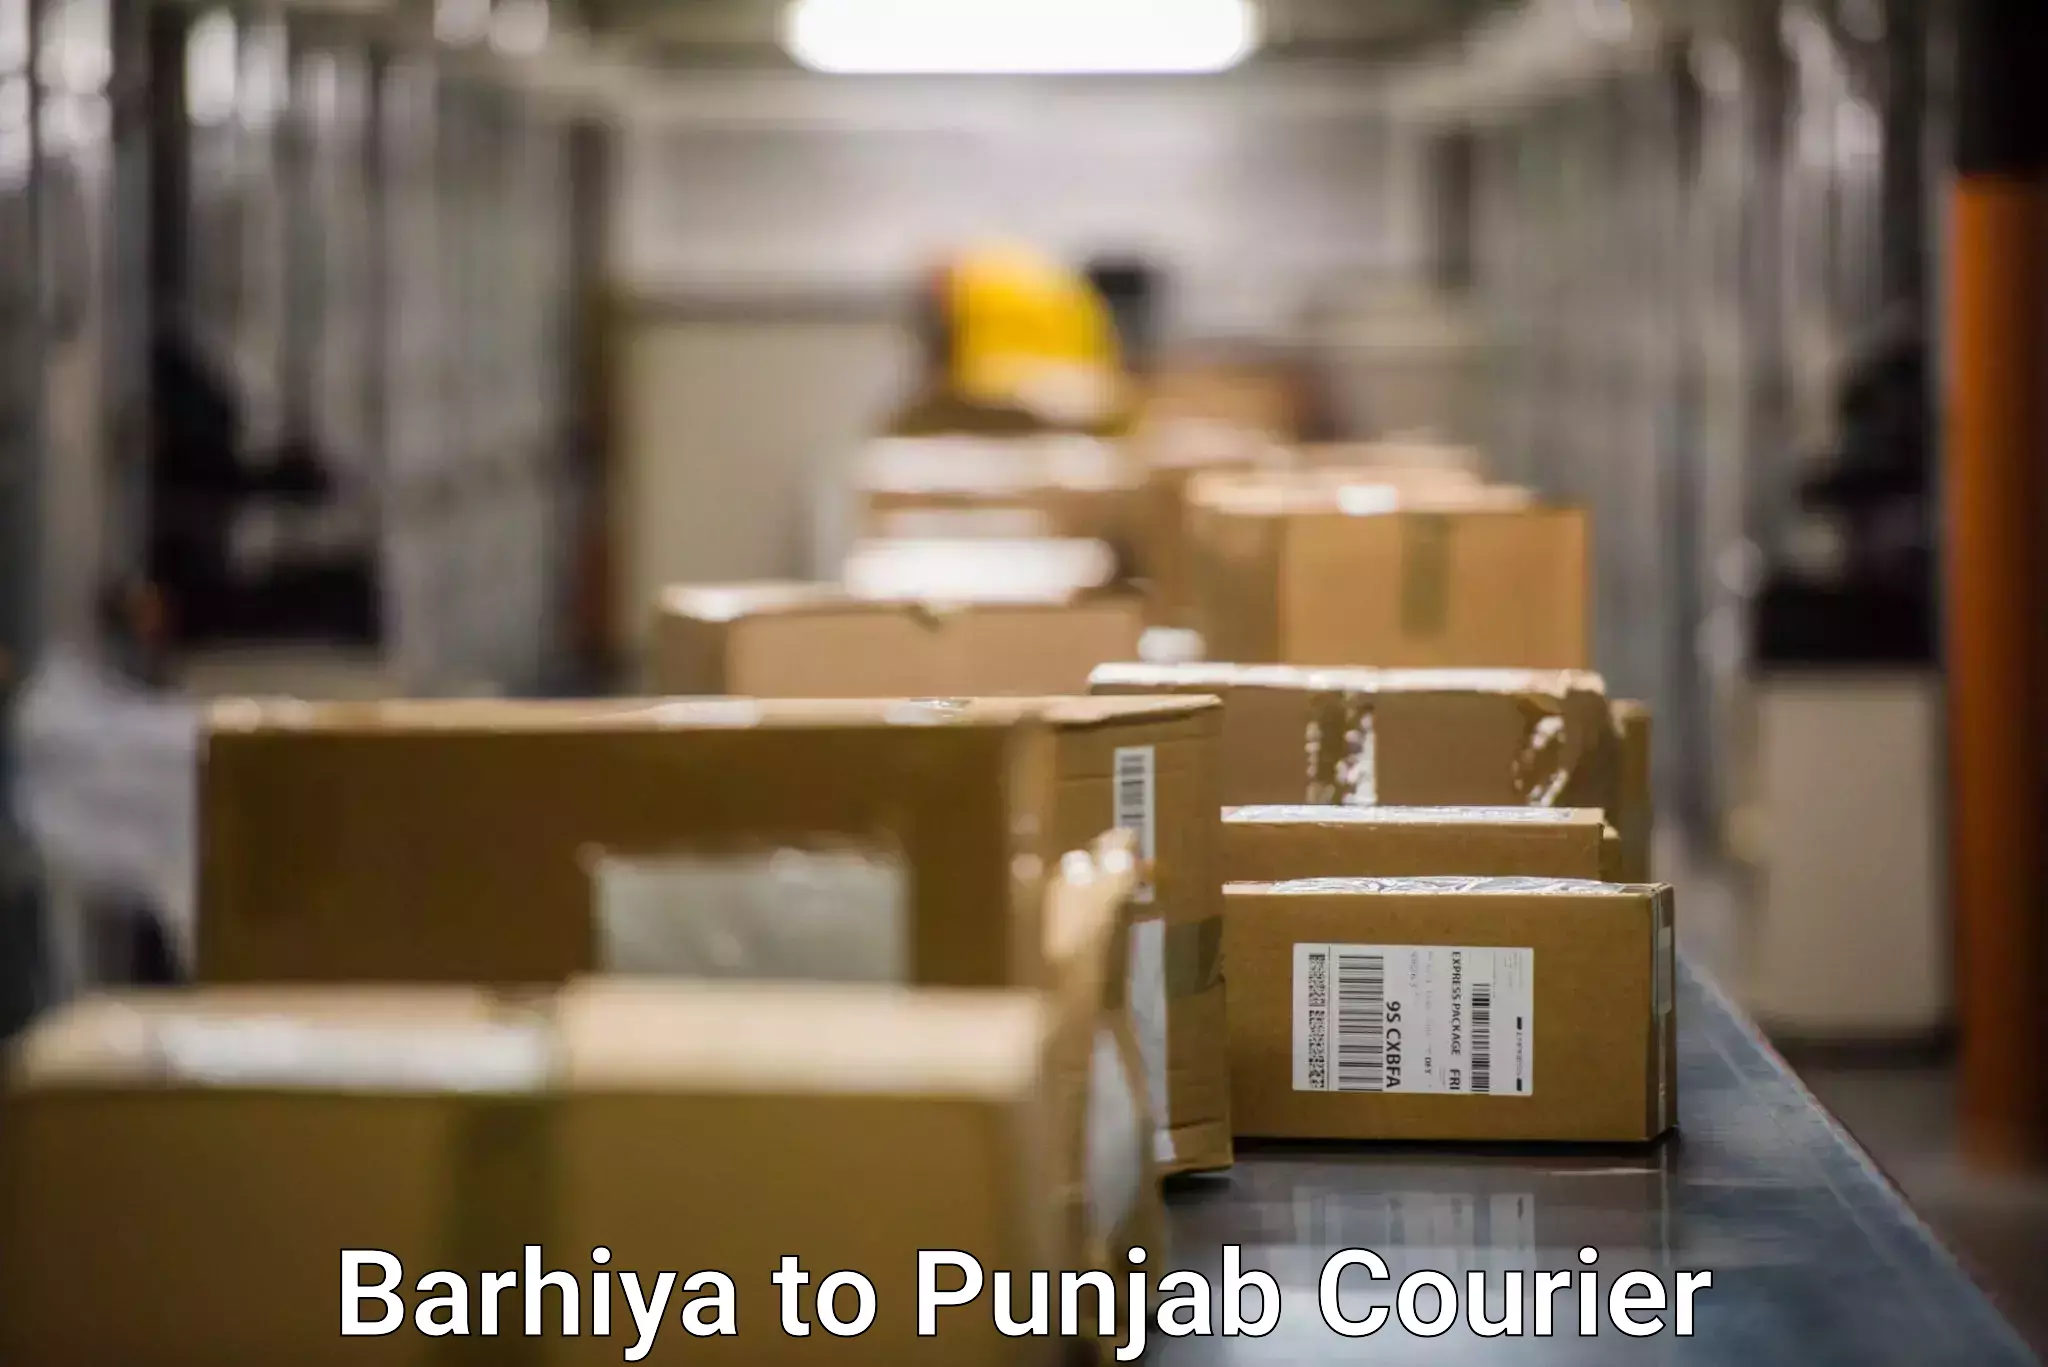 Advanced shipping technology Barhiya to Punjab